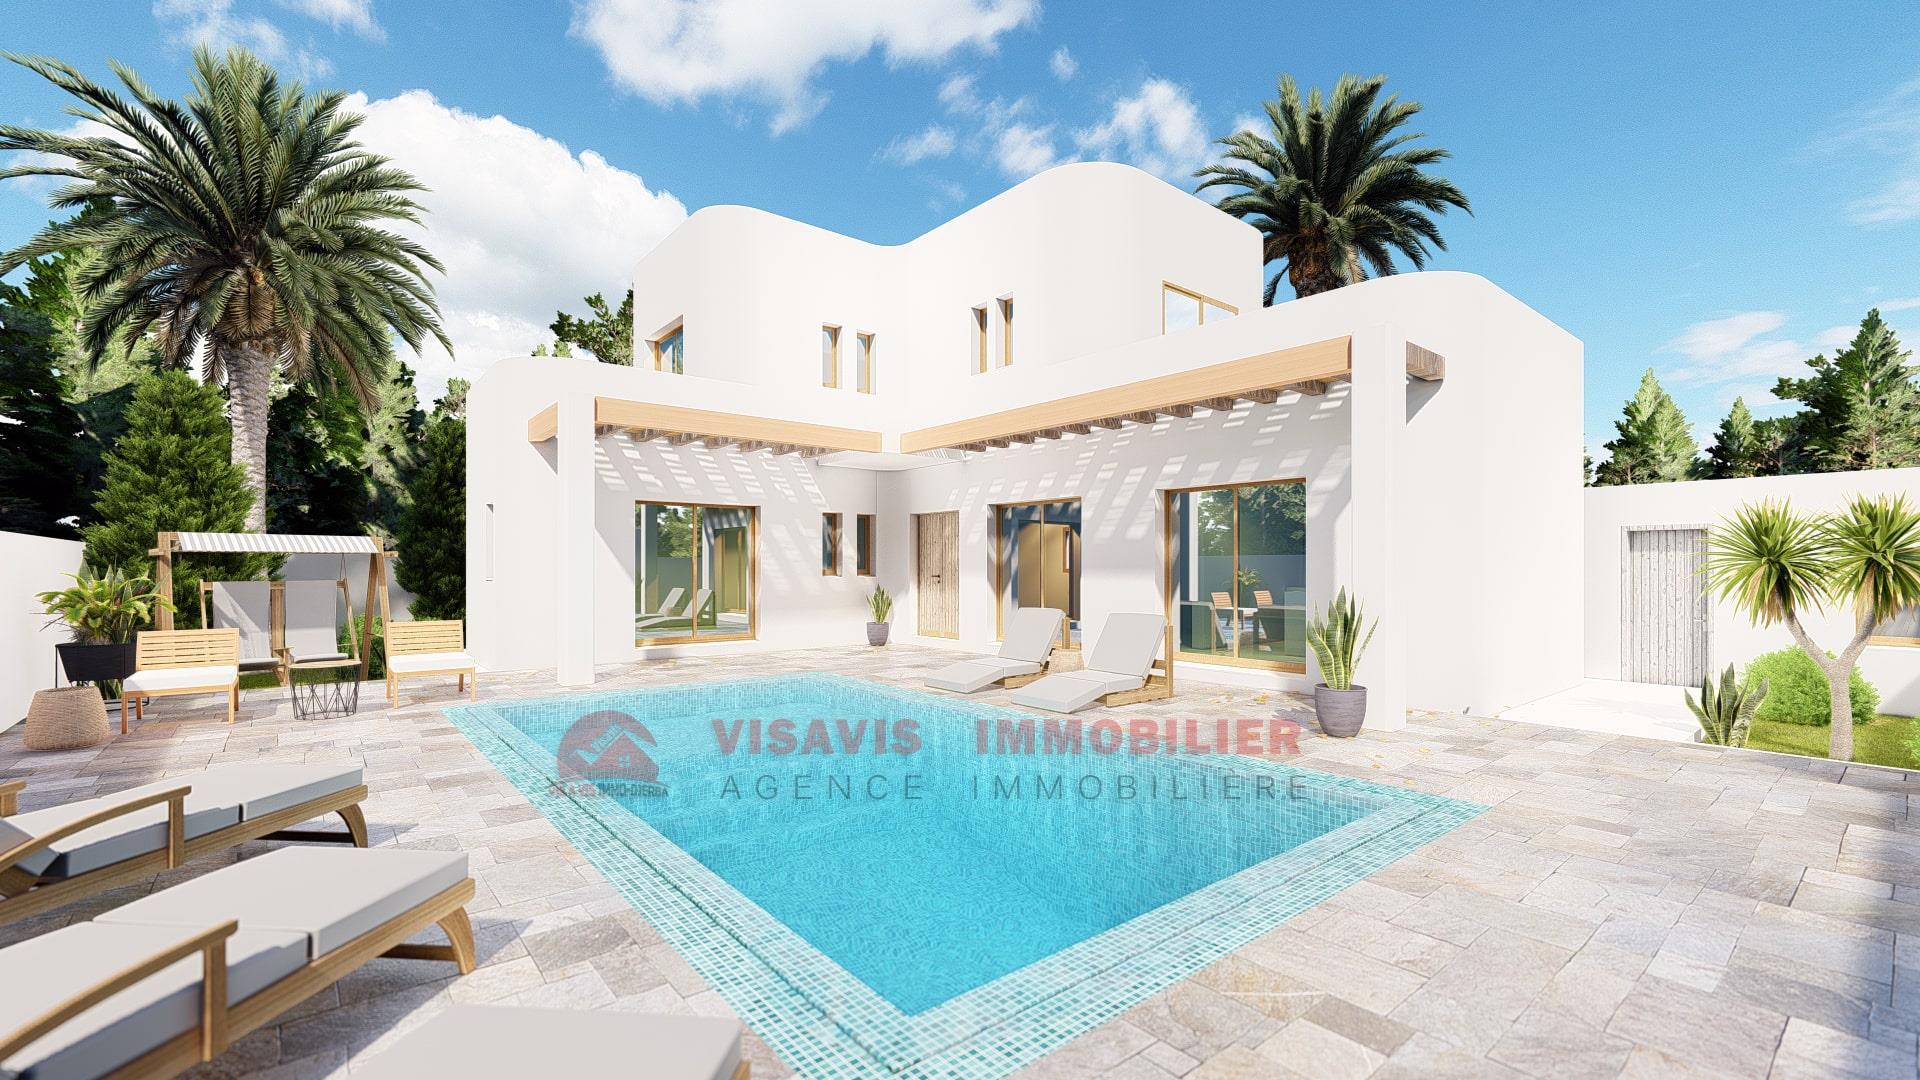 For sale in tourist area beautiful villa with private swimming pool - Ref V623